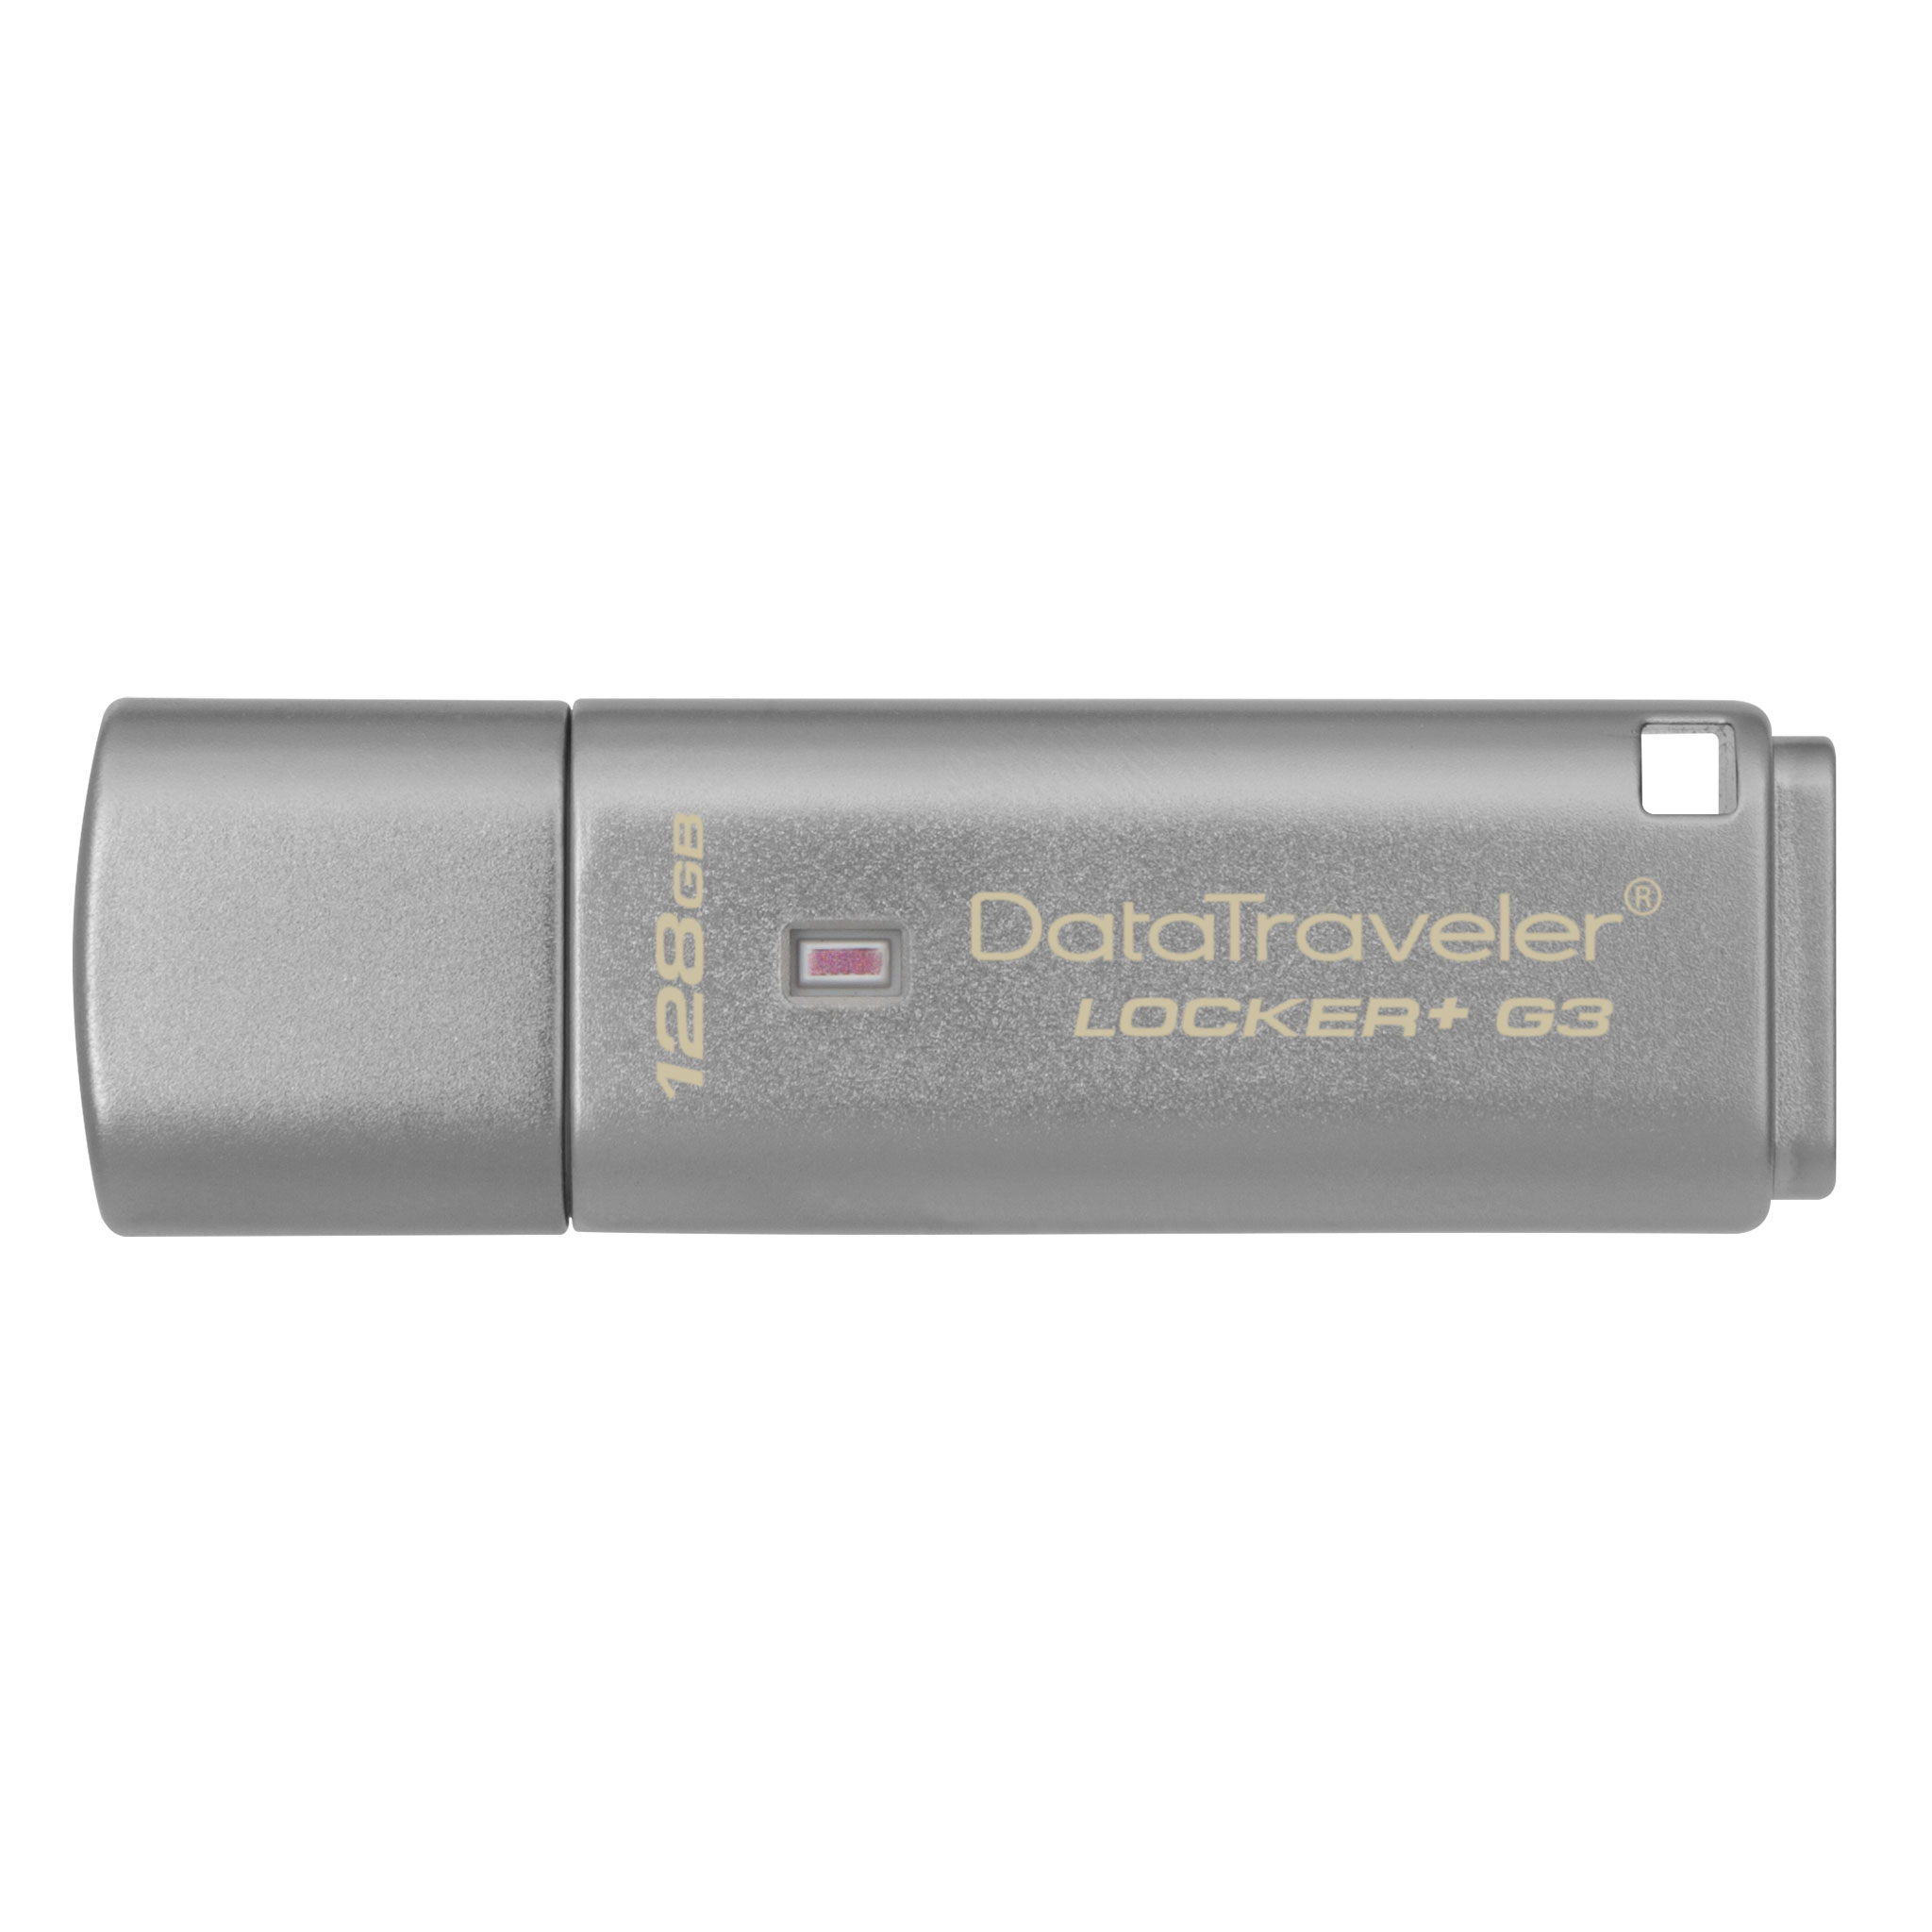 E-shop 128GB Kingston DataTraveler Locker + G3, Cloud Backup DTLPG3/128GB